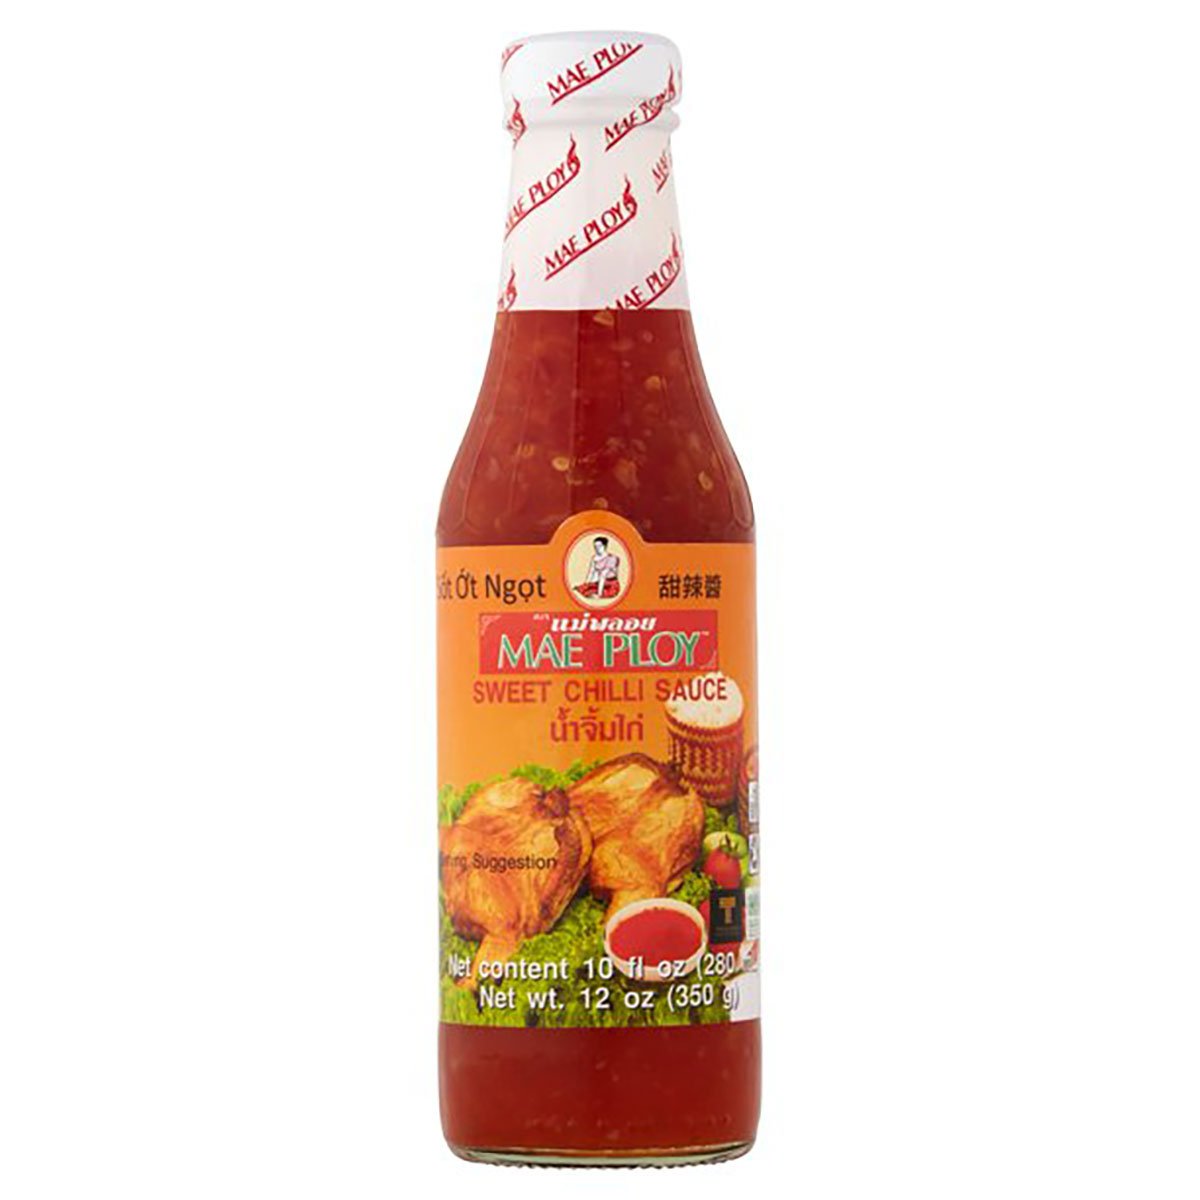 mae ploy sweet chilli sauce